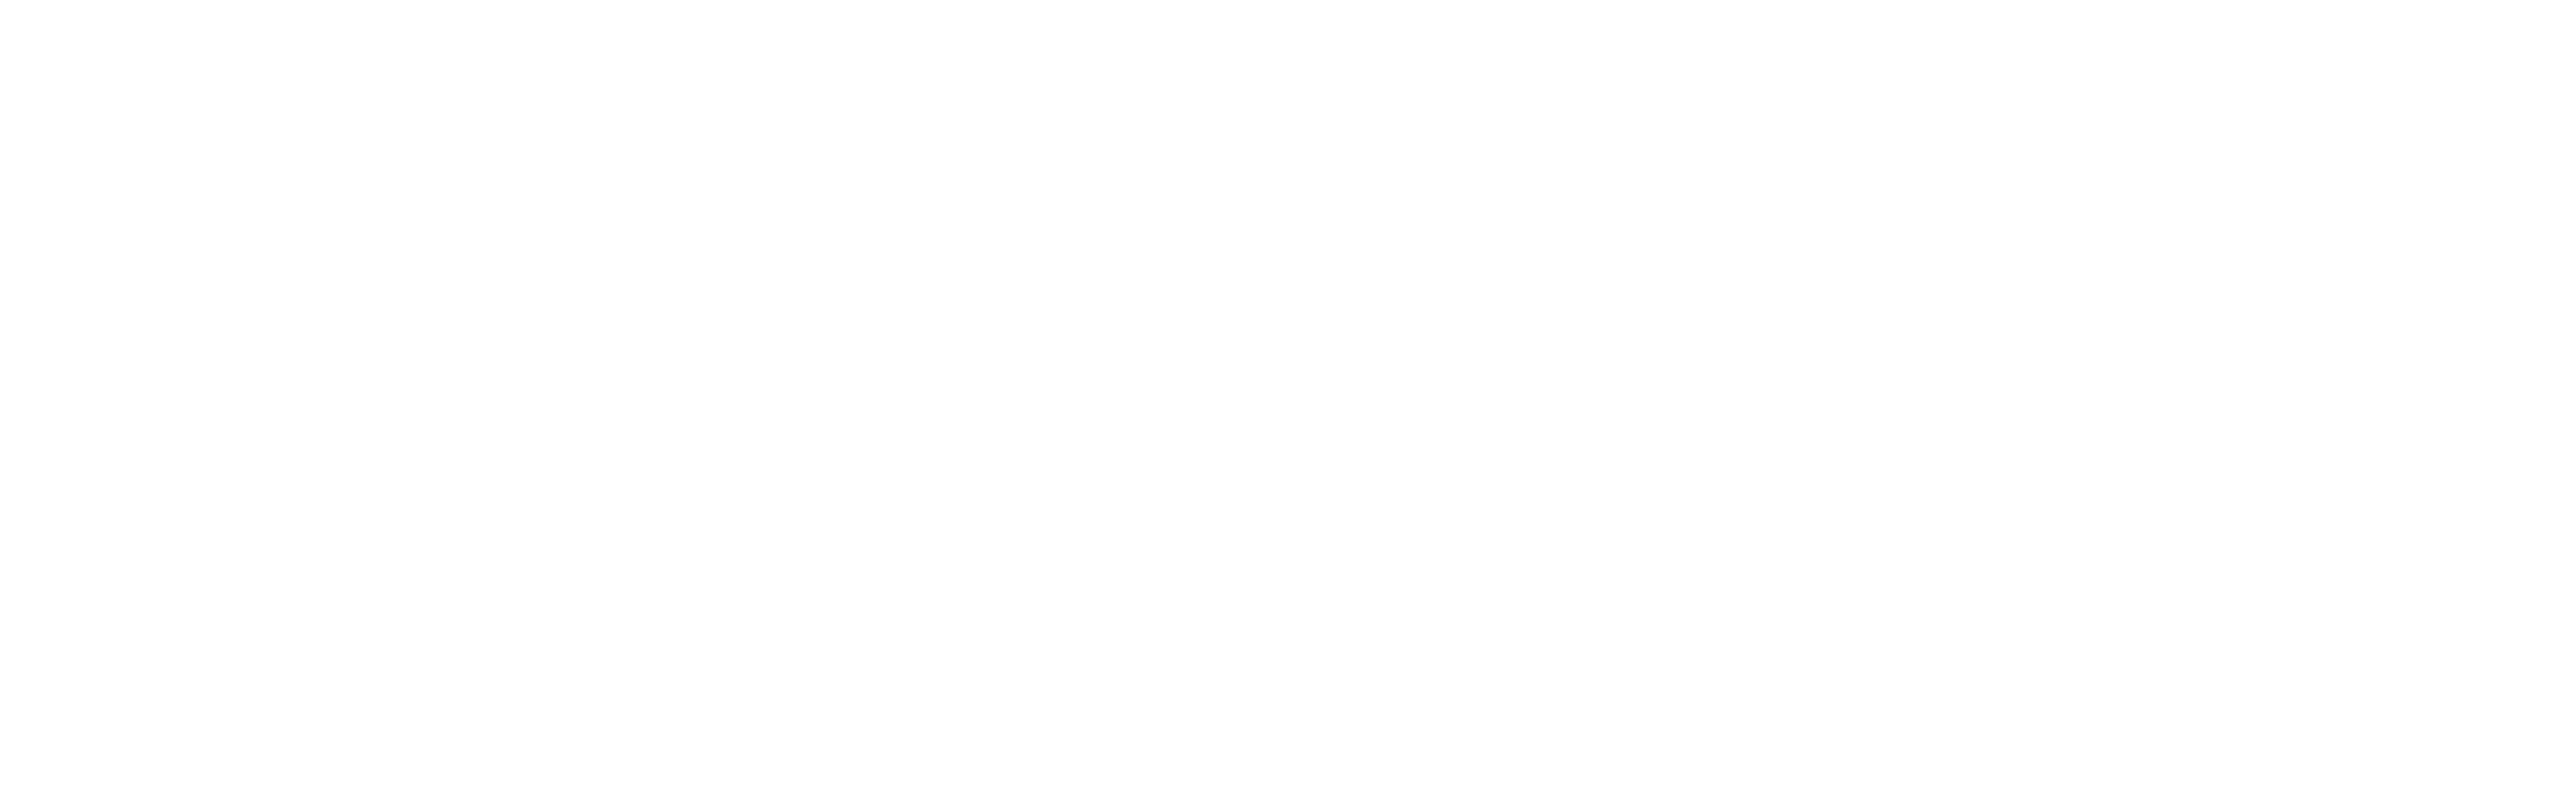 Scoundrel's Field Guide